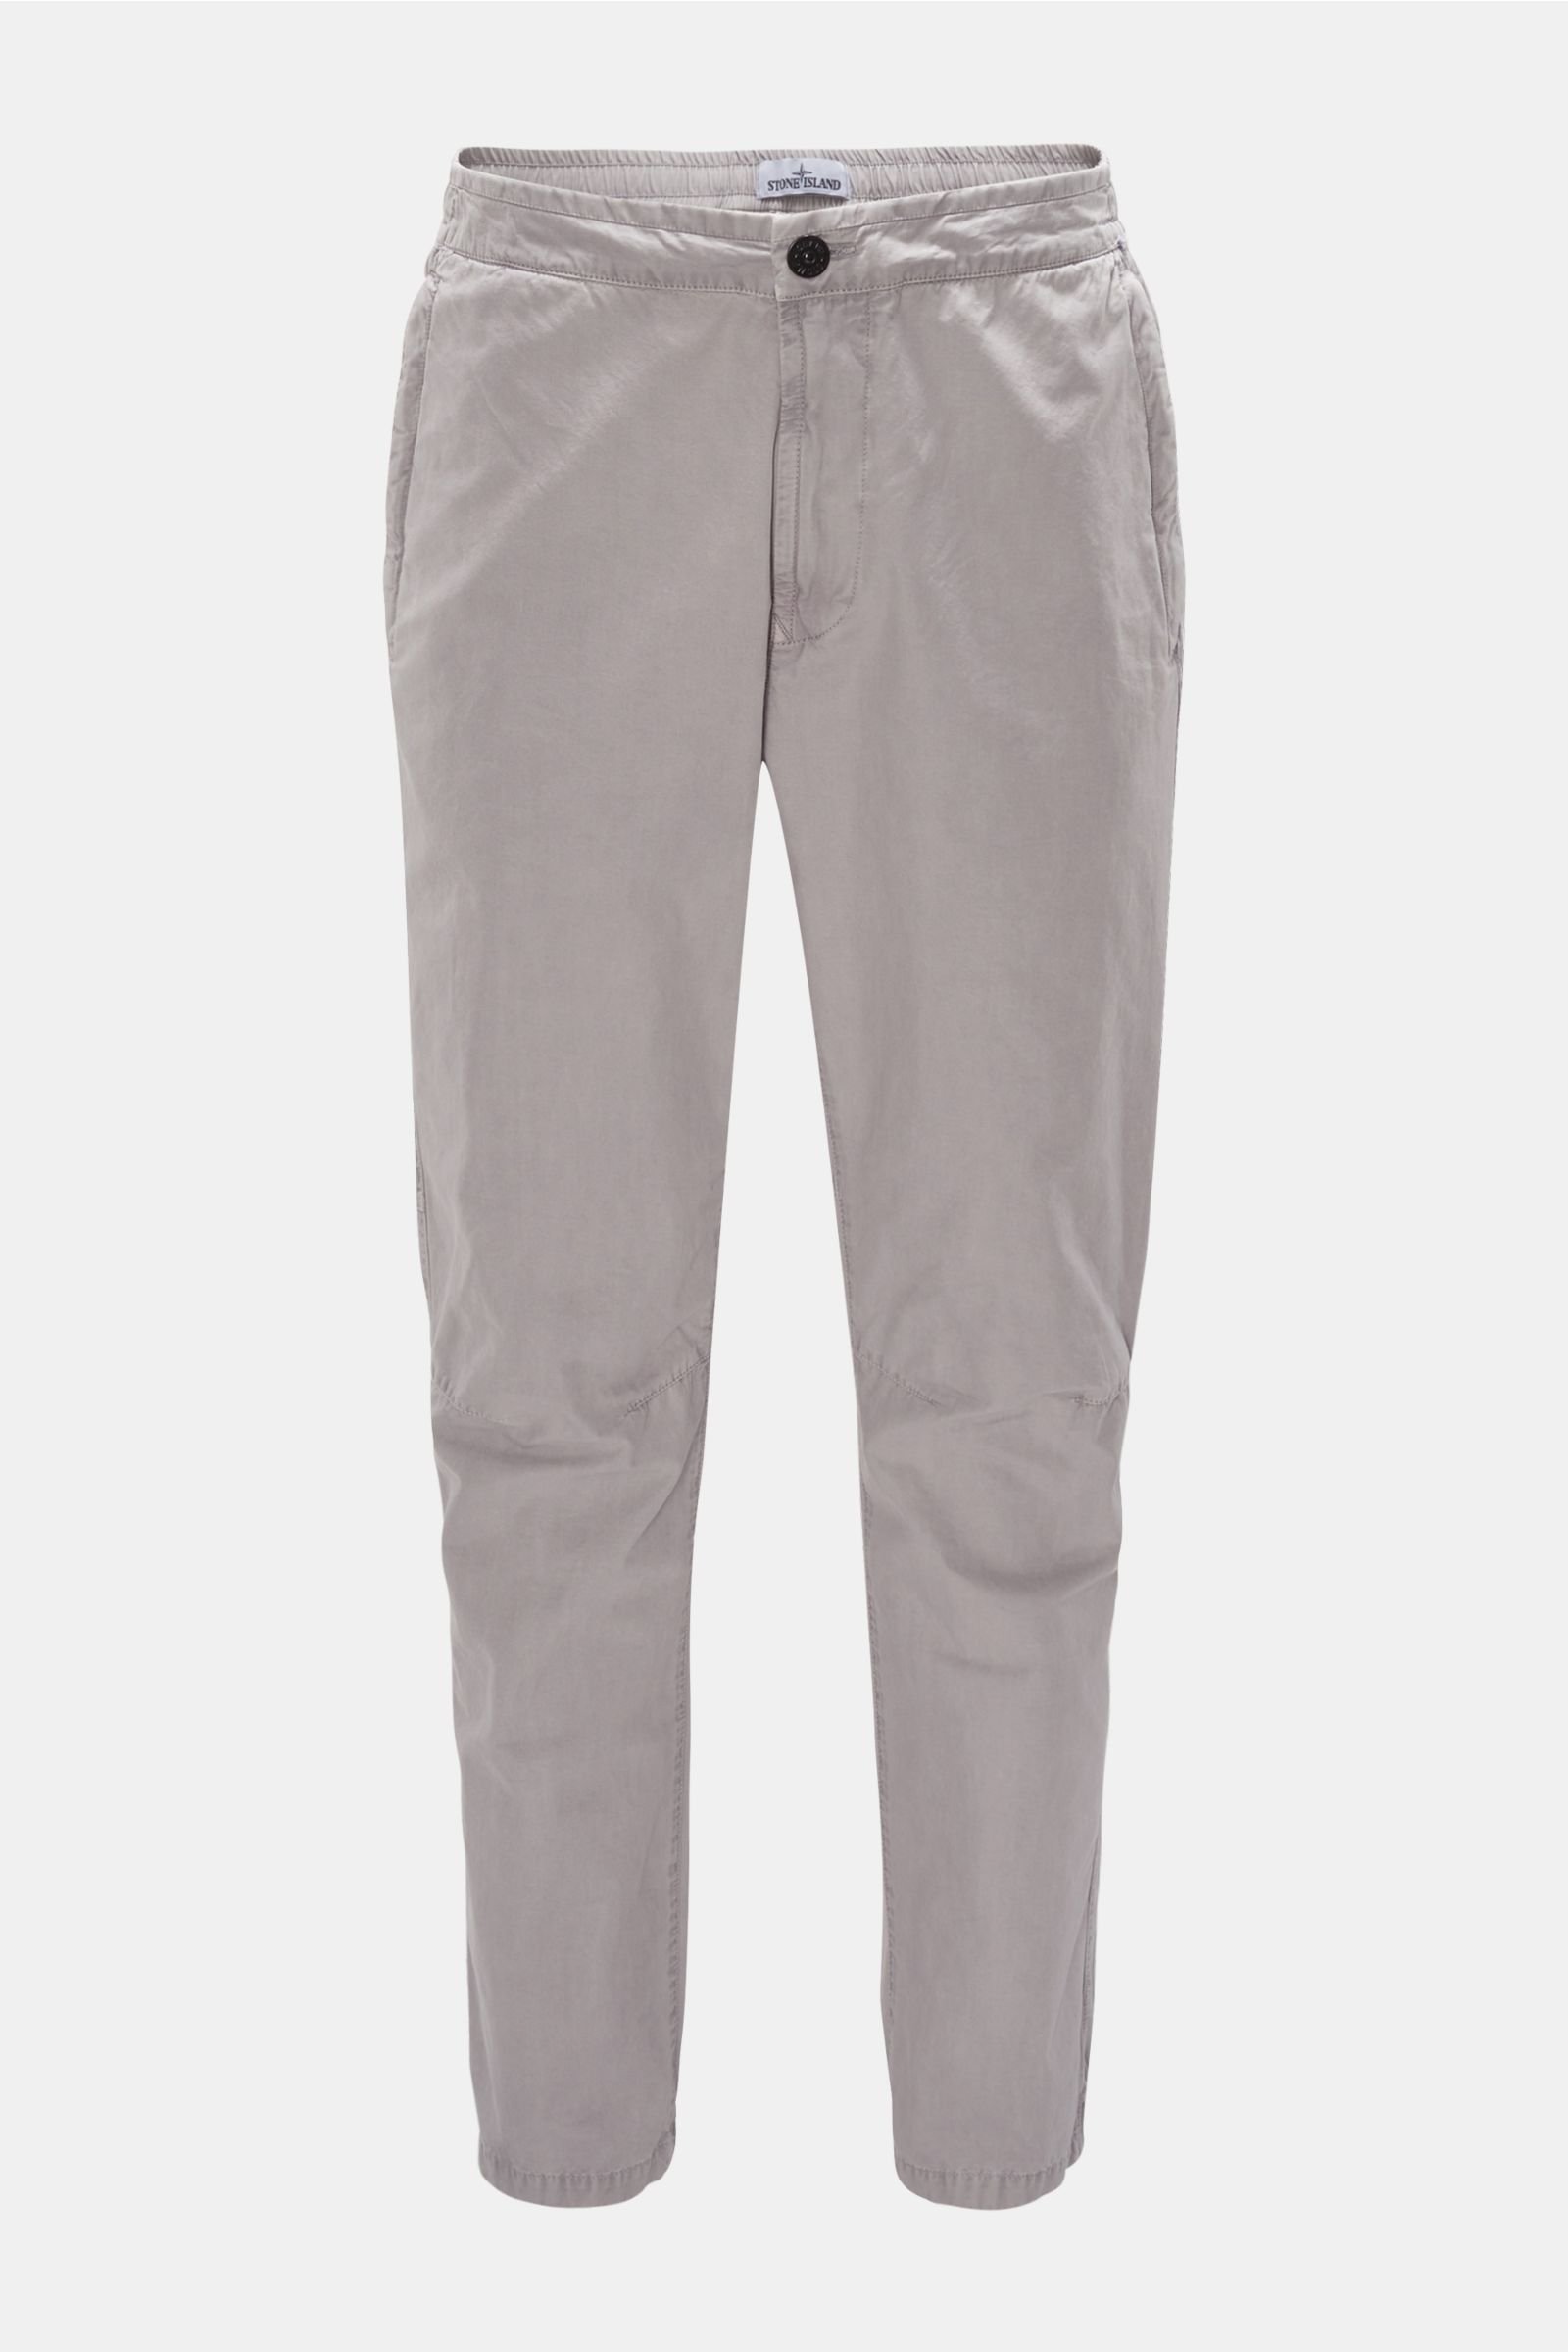 Cotton jogger pants light grey